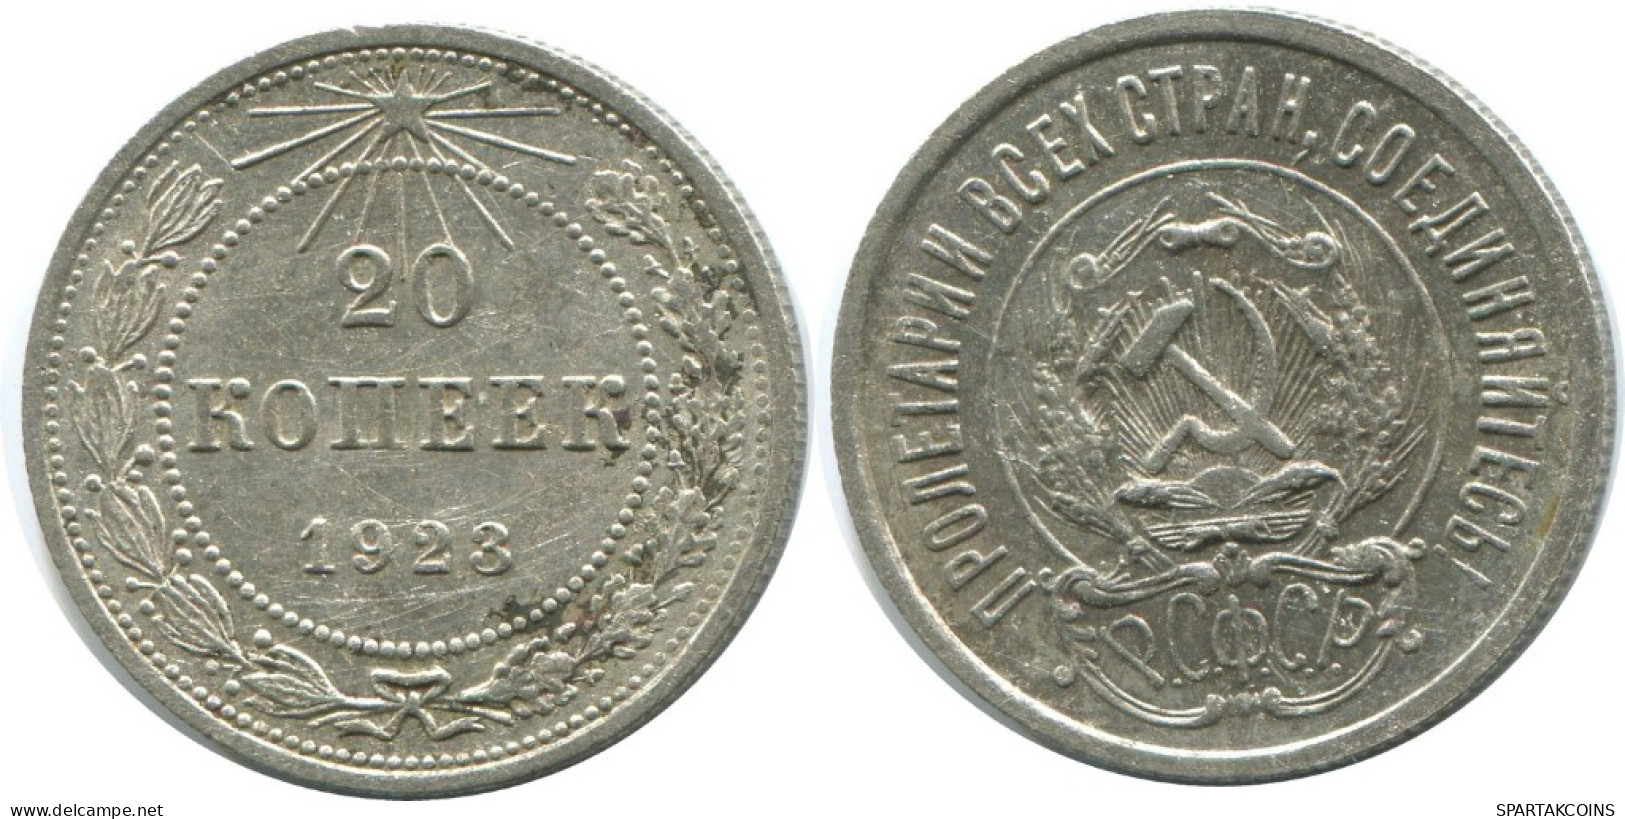 20 KOPEKS 1923 RUSSIA RSFSR SILVER Coin HIGH GRADE #AF608.U.A - Russia